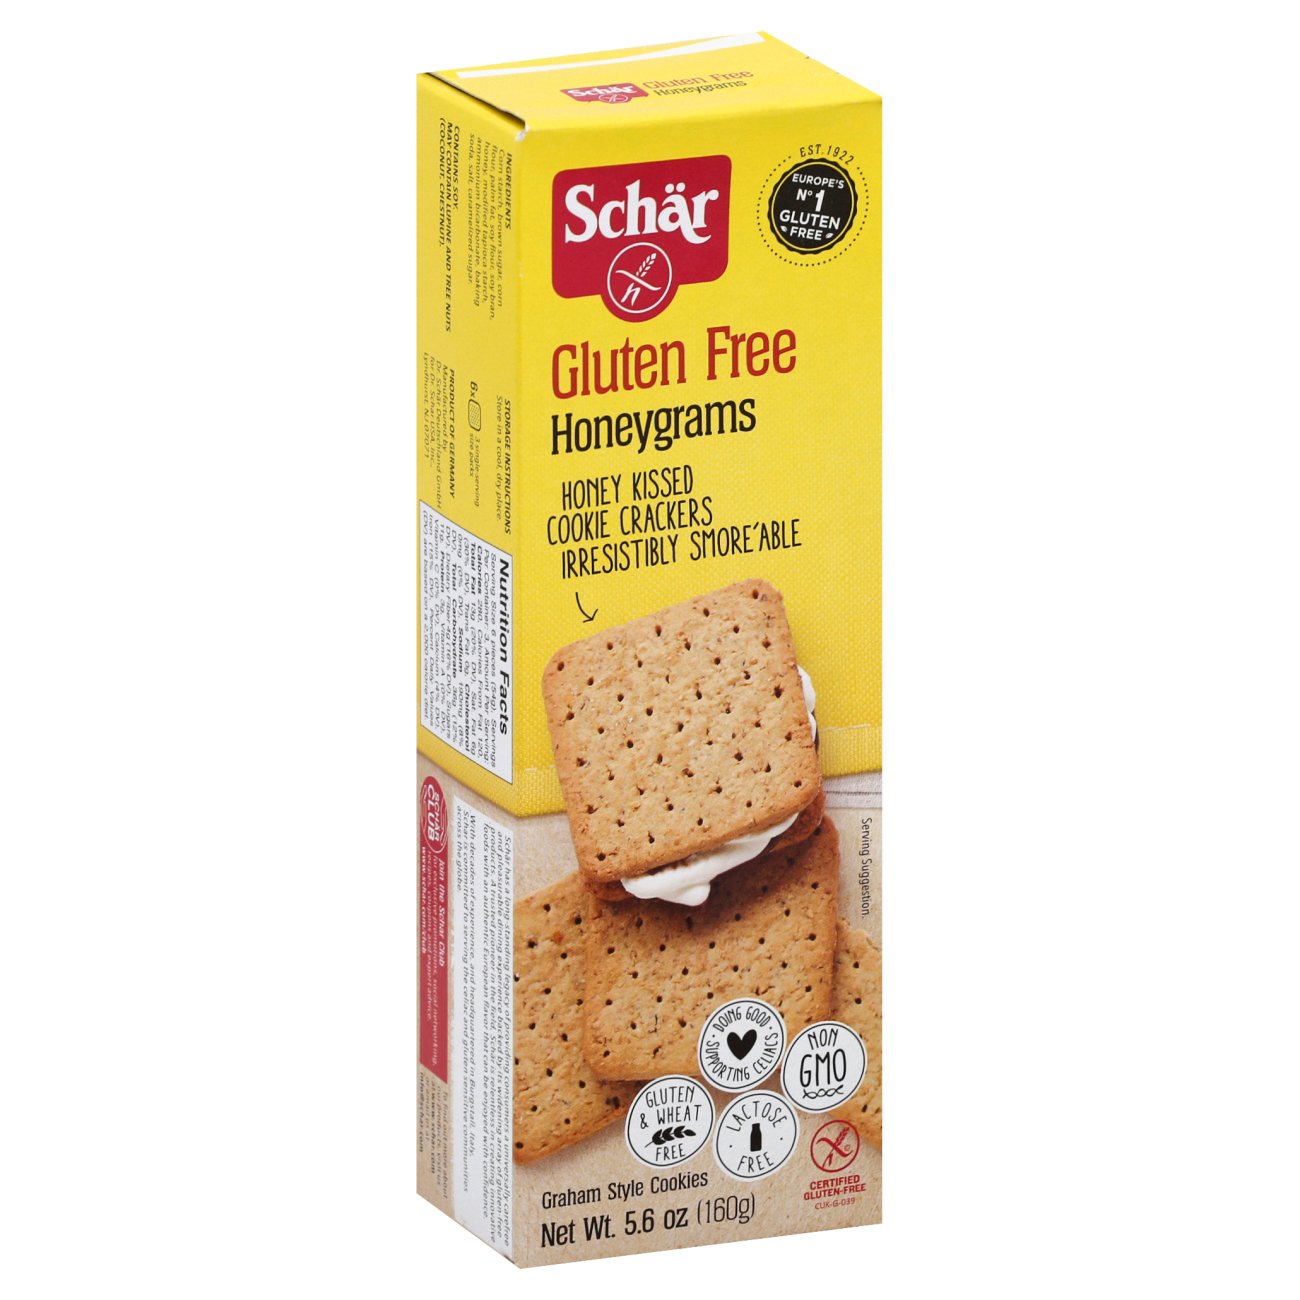 Schar Gluten Free Honeygrams Crackers